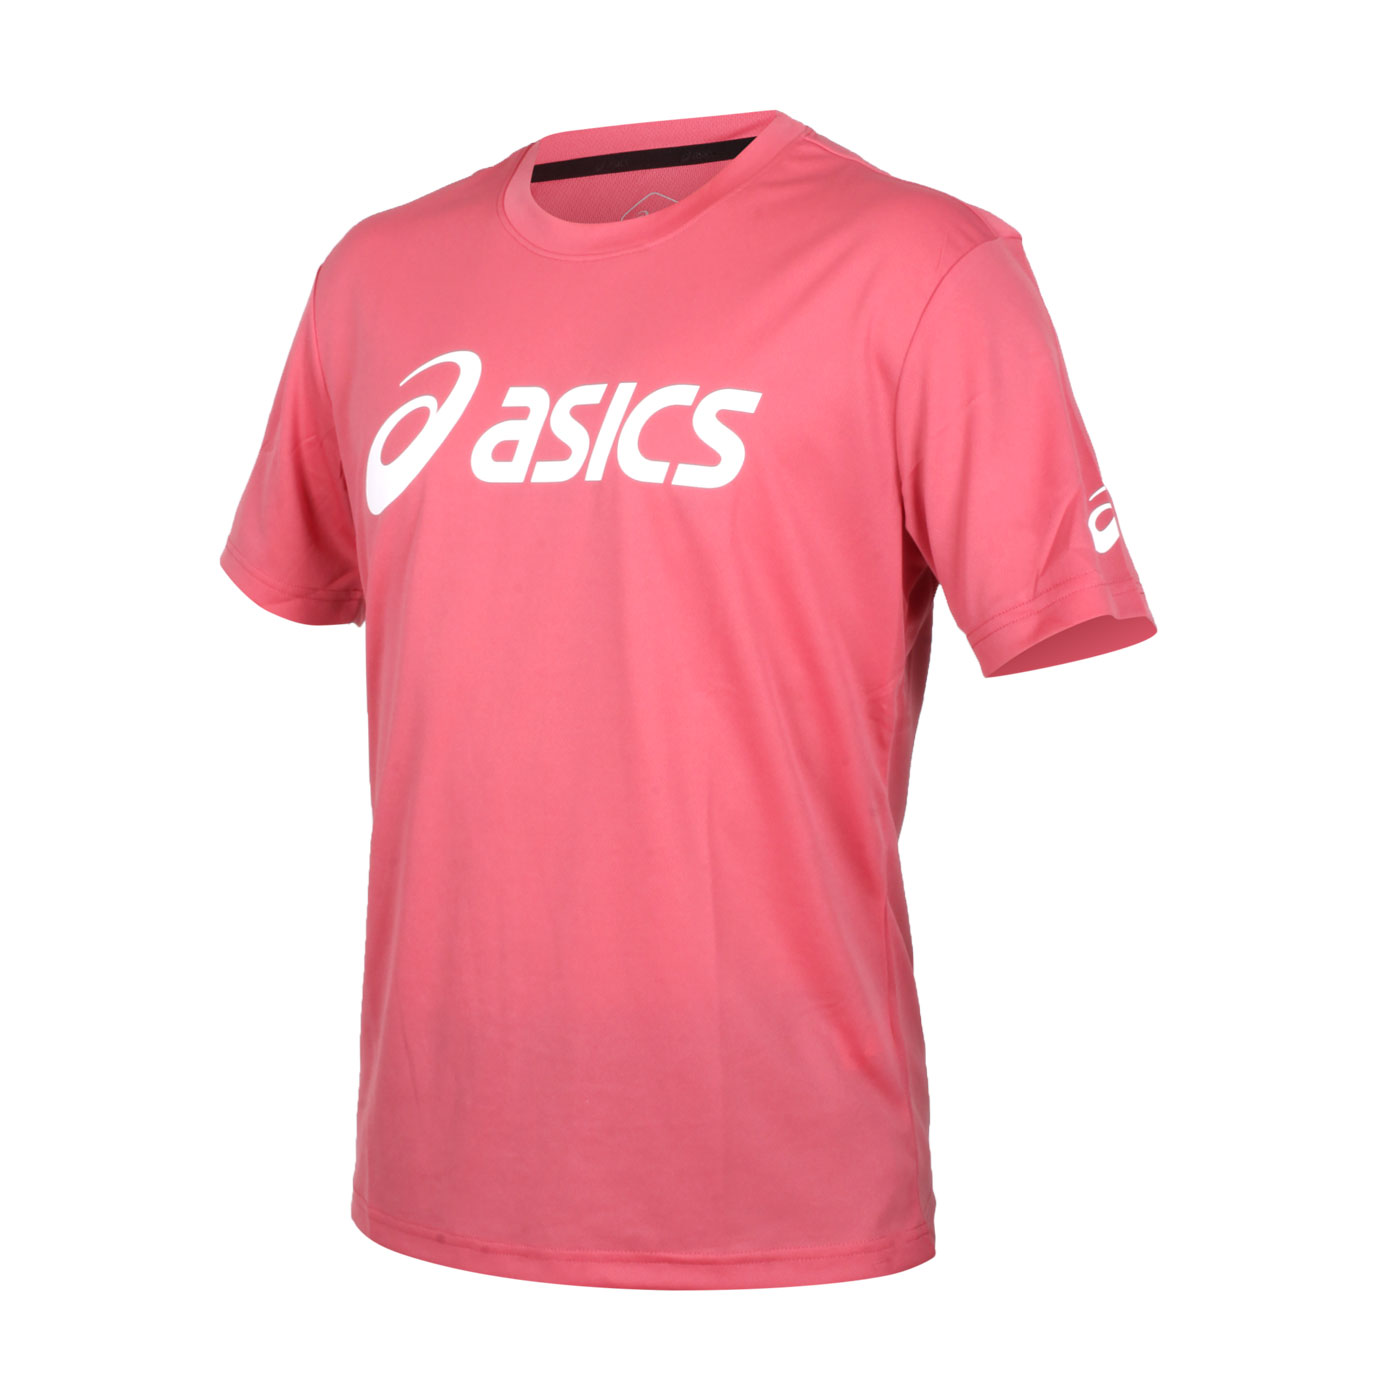 ASICS 短袖T恤  2033B666-700 - 莓紅白